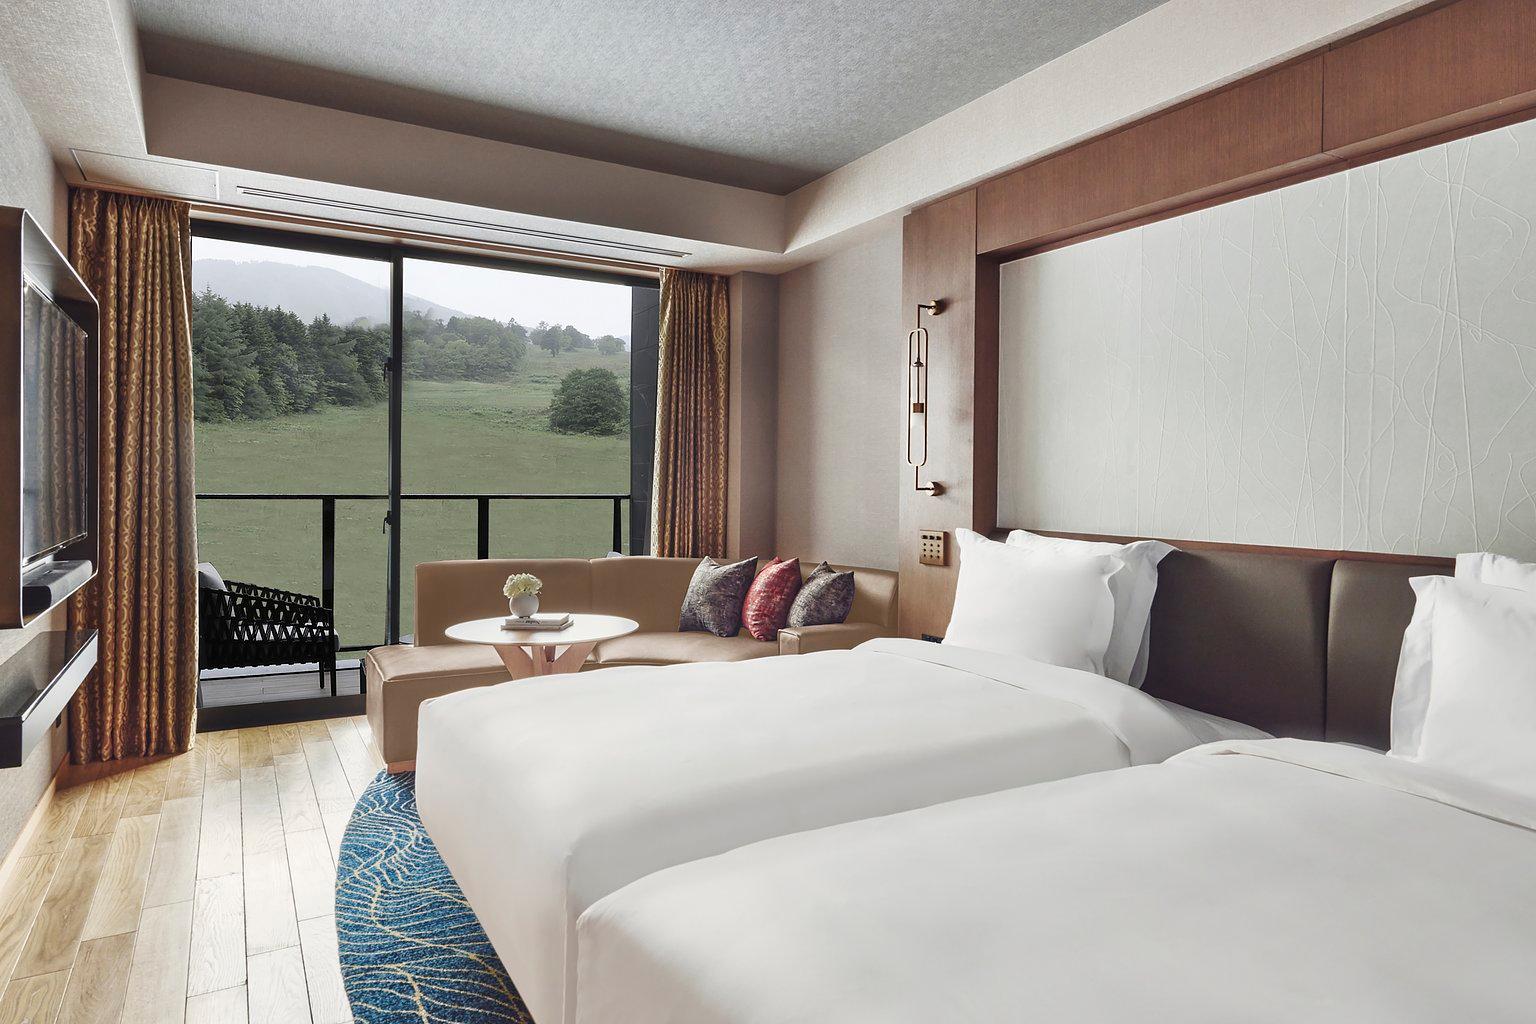 2 Double Classic Mountain View - ANA InterContinental Appi Kogen Resort